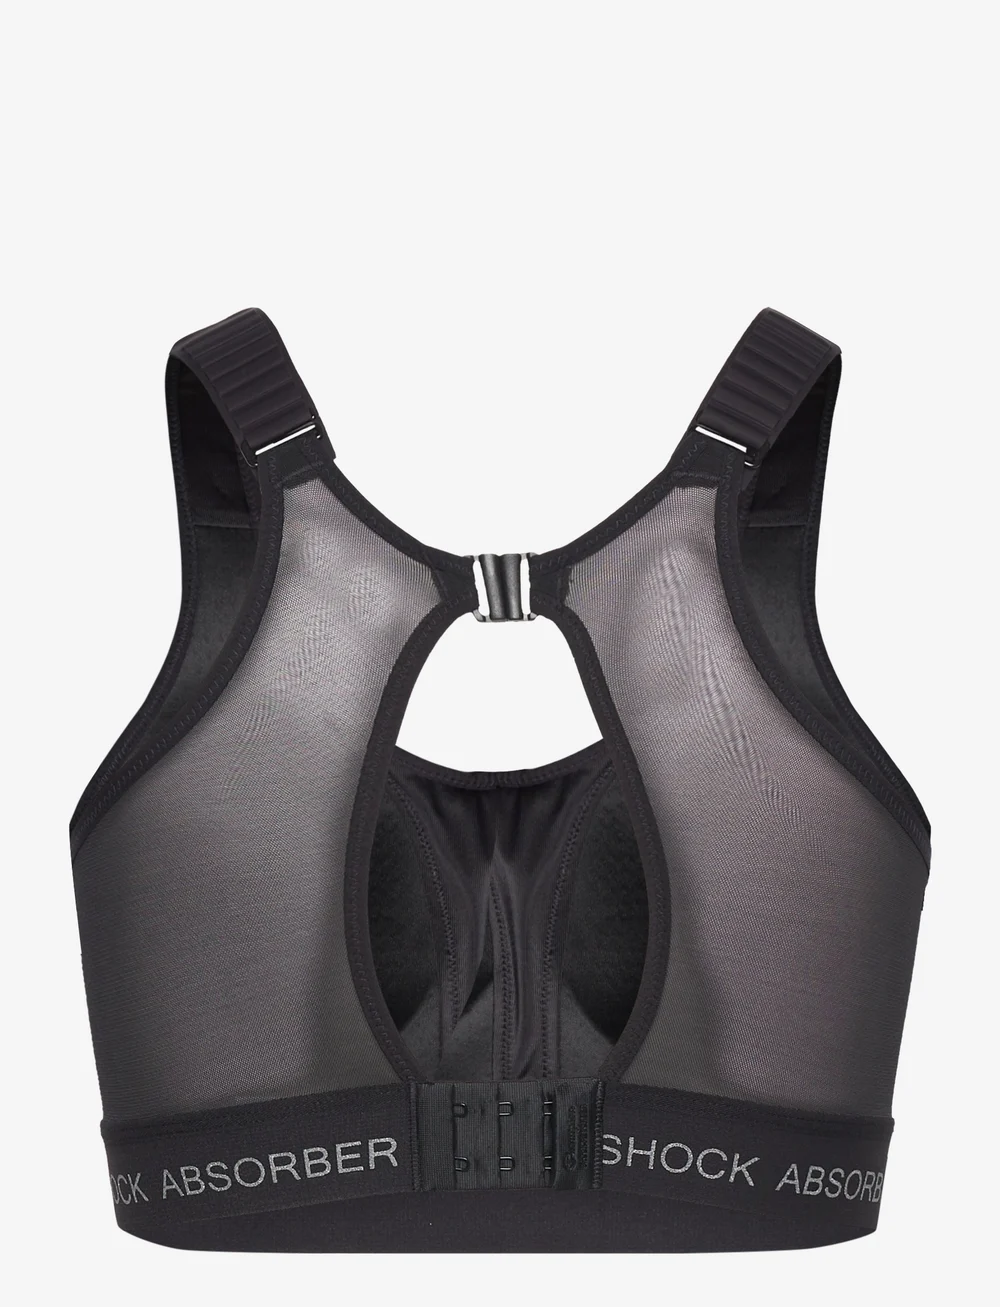 Shock Absorber Ultimate Run Bra Padded 06s7 – bras – shop at Booztlet